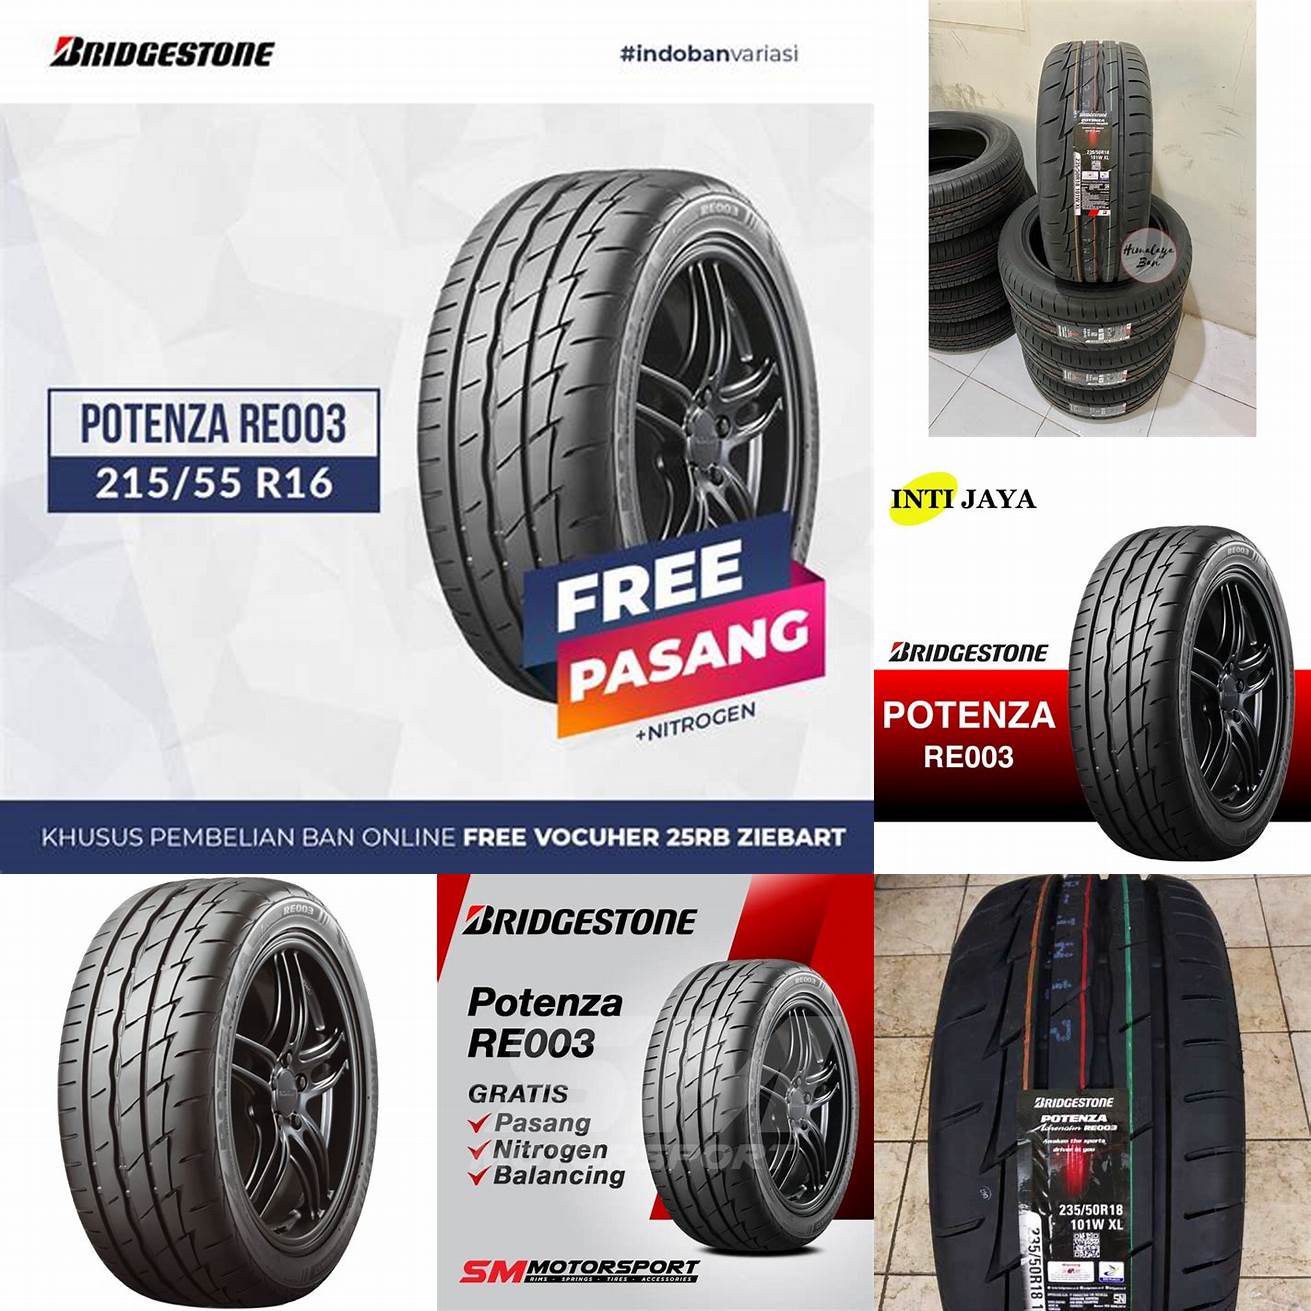 Harga ban mobil Bridgestone Potenza RE003 ring 14 Rp 1400000 - Rp 1800000